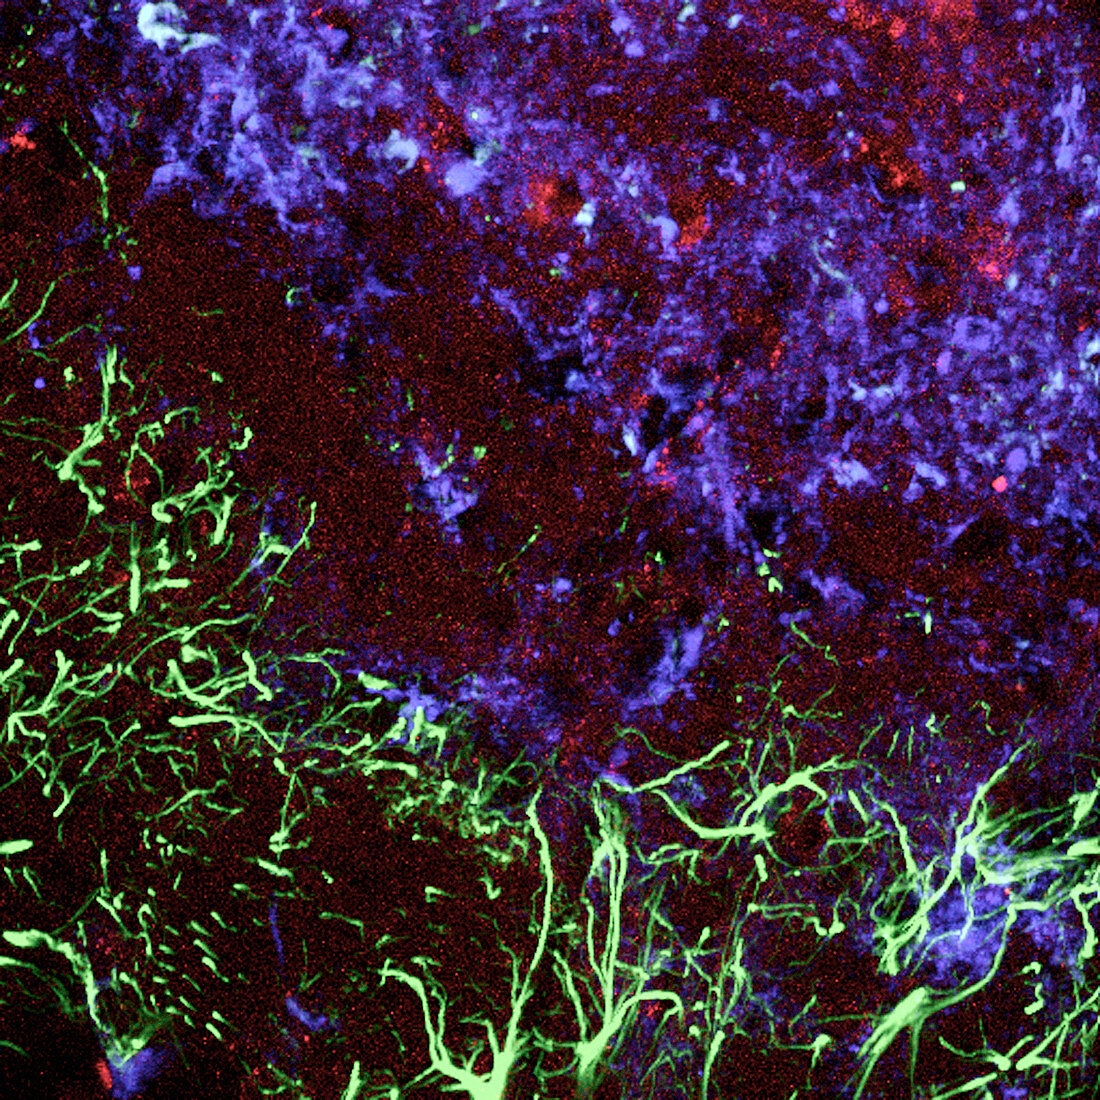 Damaged brain tissue,light micrograph